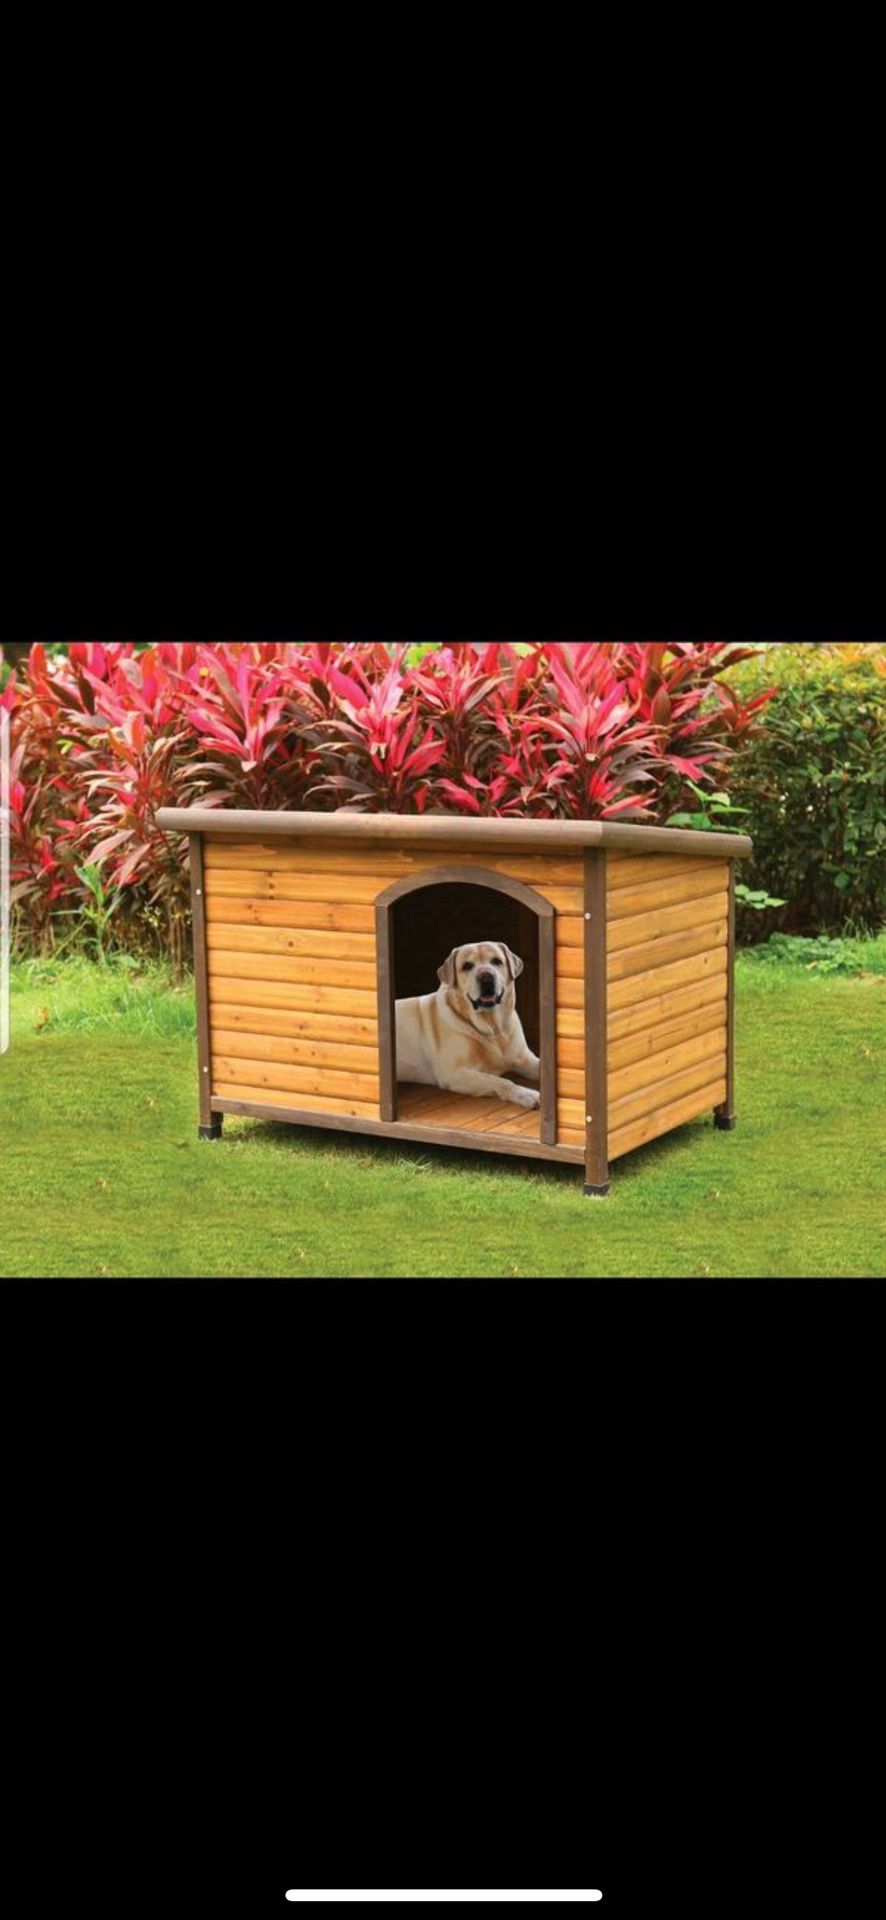 Brand new wooden doghouse! Nueva casita de madera para mascota!!